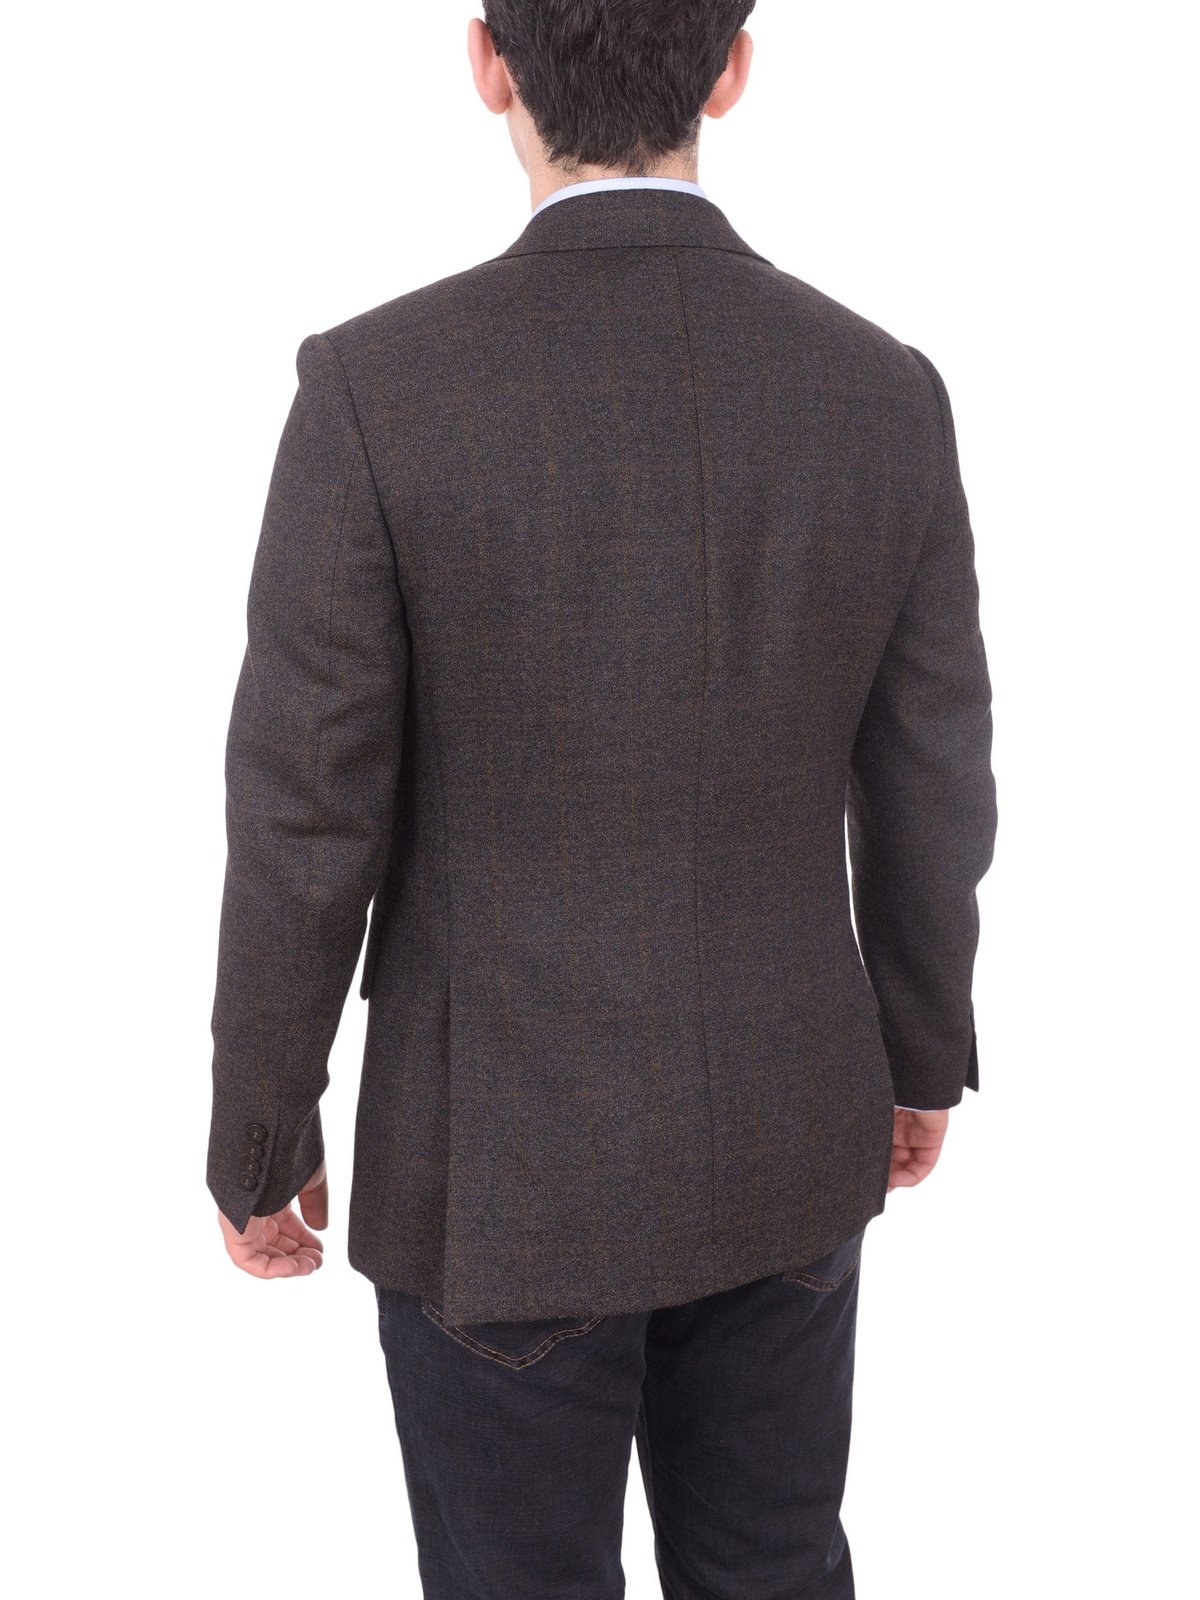 Napoli BLAZERS Mens Napoli Slim Fit Brown Textured Half Canvassed Wool Blazer Sportcoat